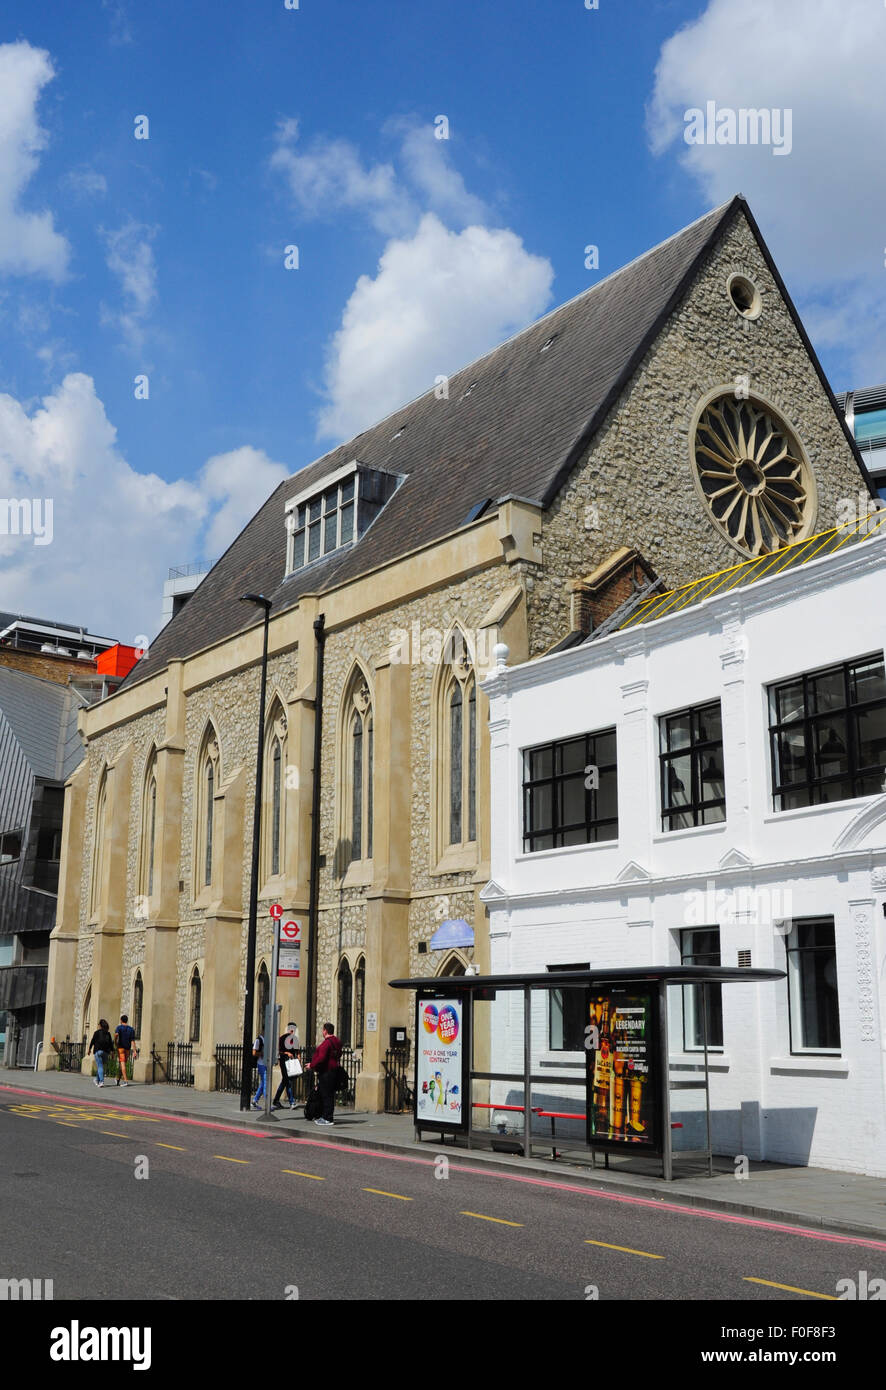 Ethiopian Christian Fellowship Church in the United Kingdom, King's Cross Road Elevation, London, England, UK Stock Photo